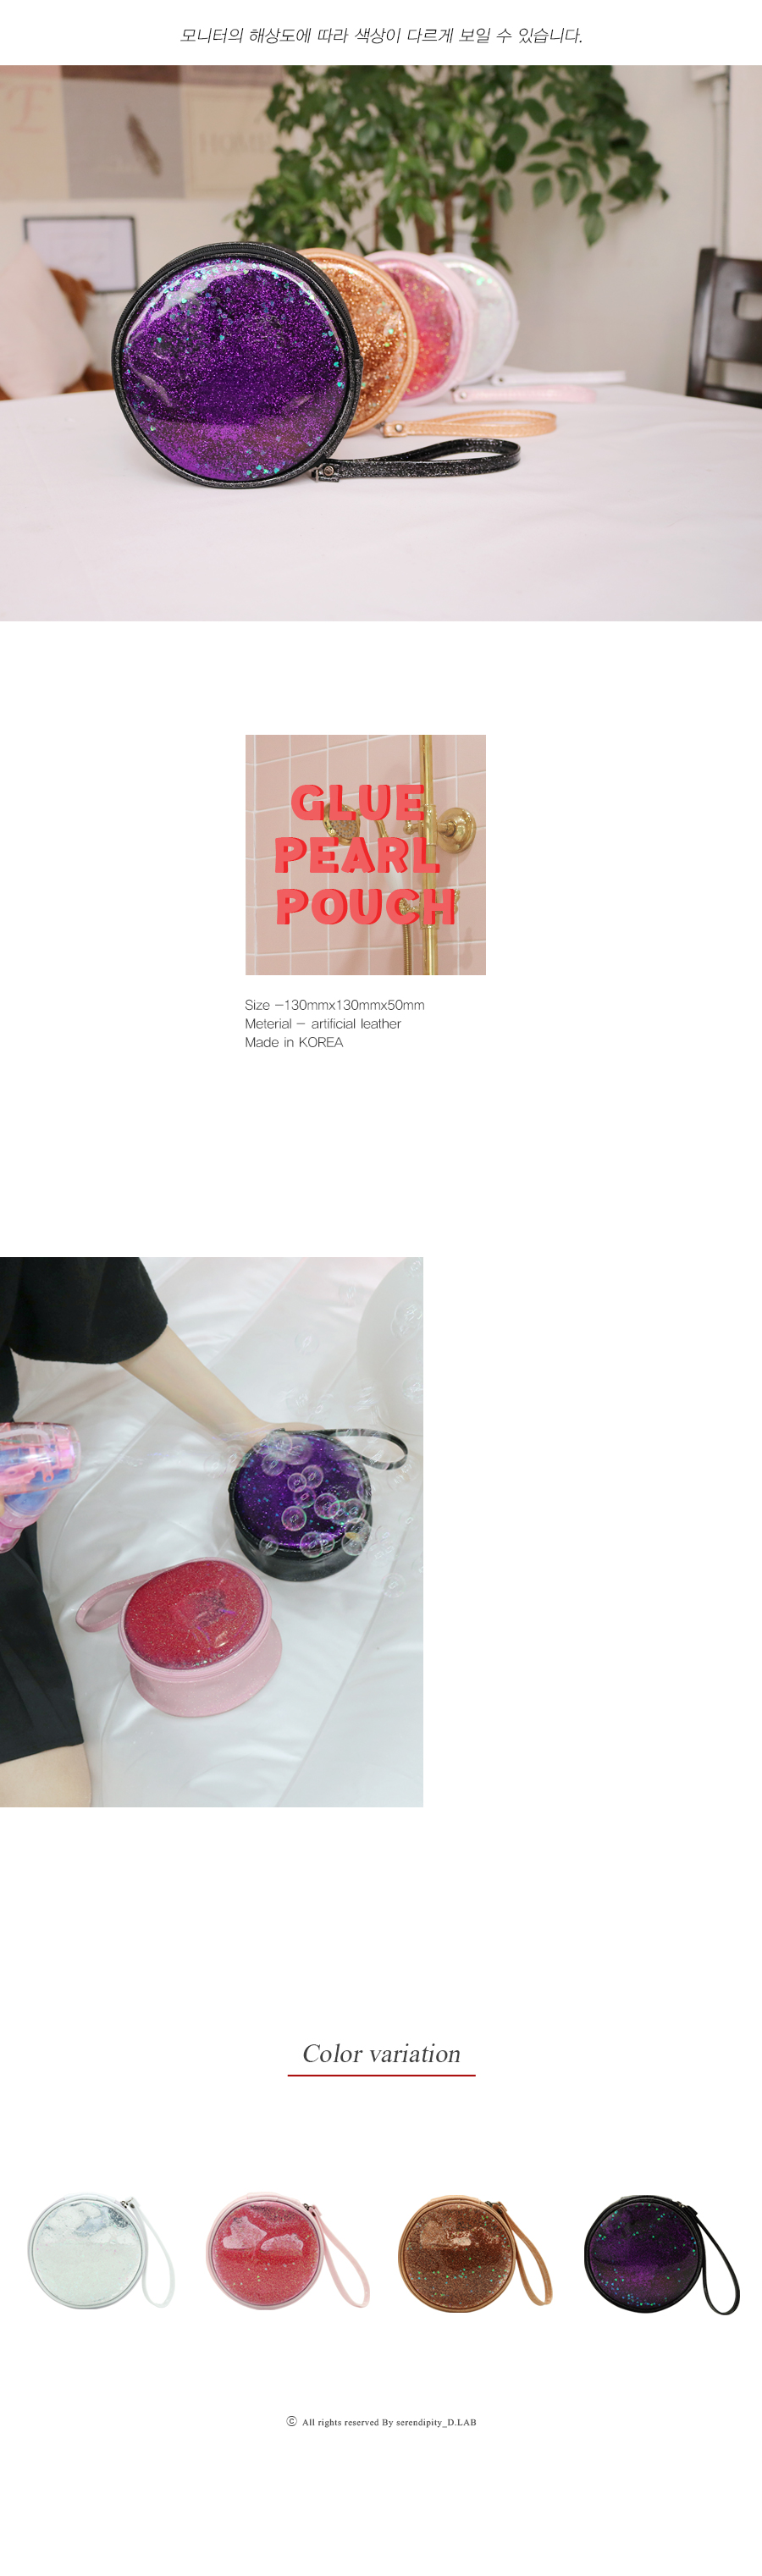 D.LAB Glue Pearl Pouch - Pink - 디랩, 18,800원, 다용도파우치, 지퍼형